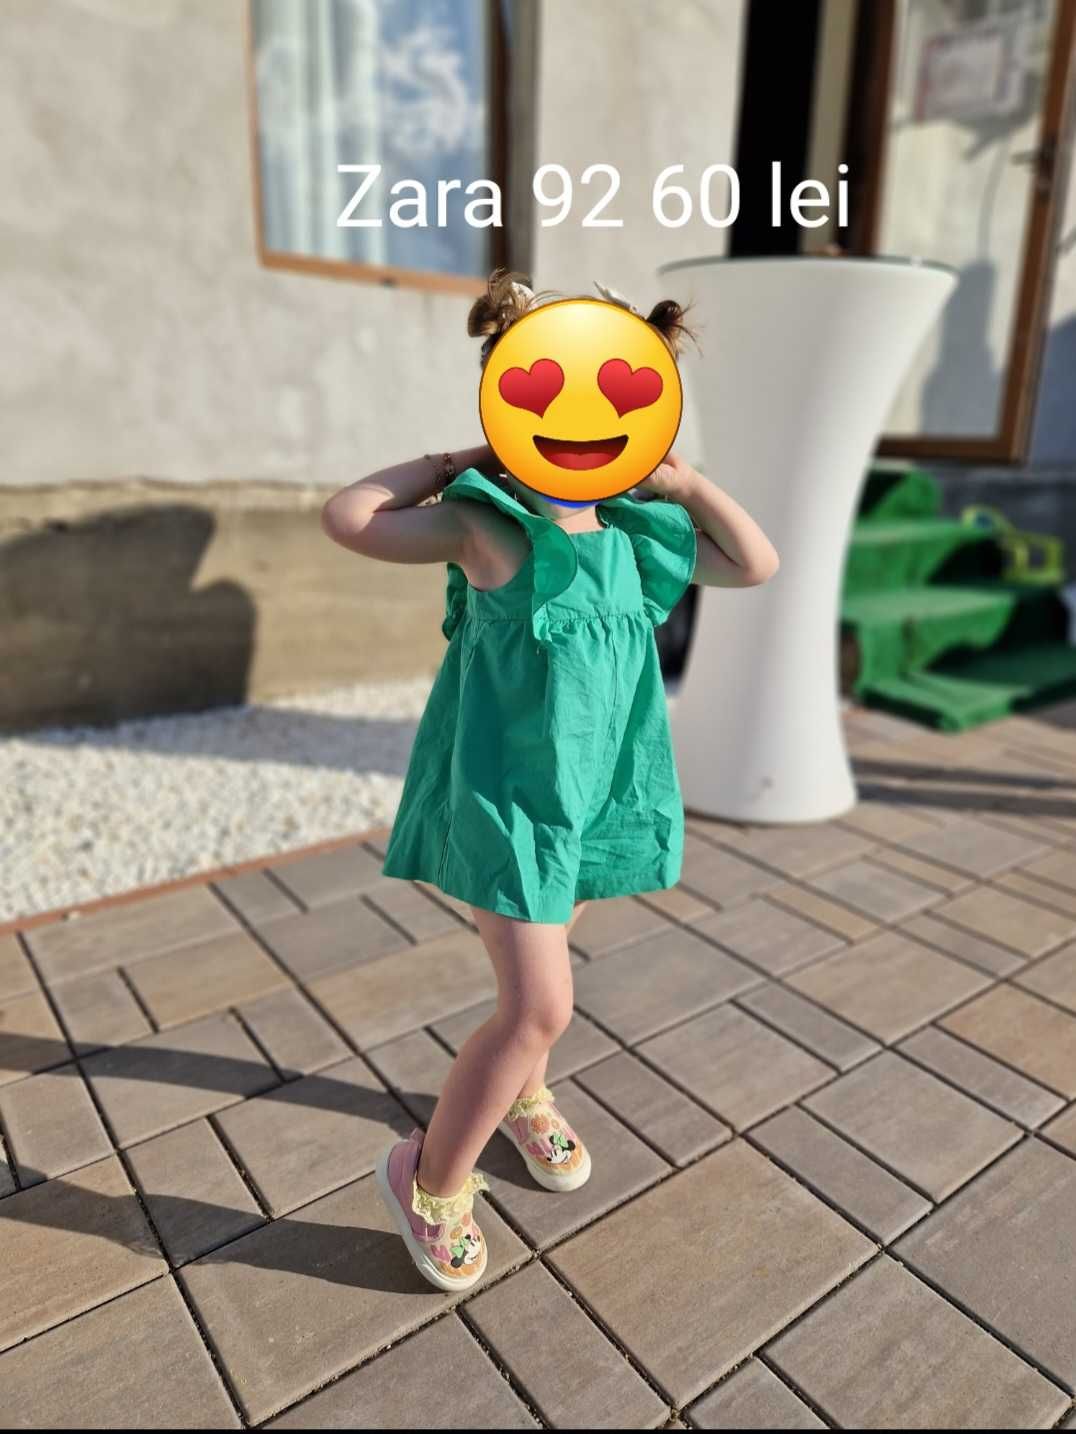 Salopeta Zara 92